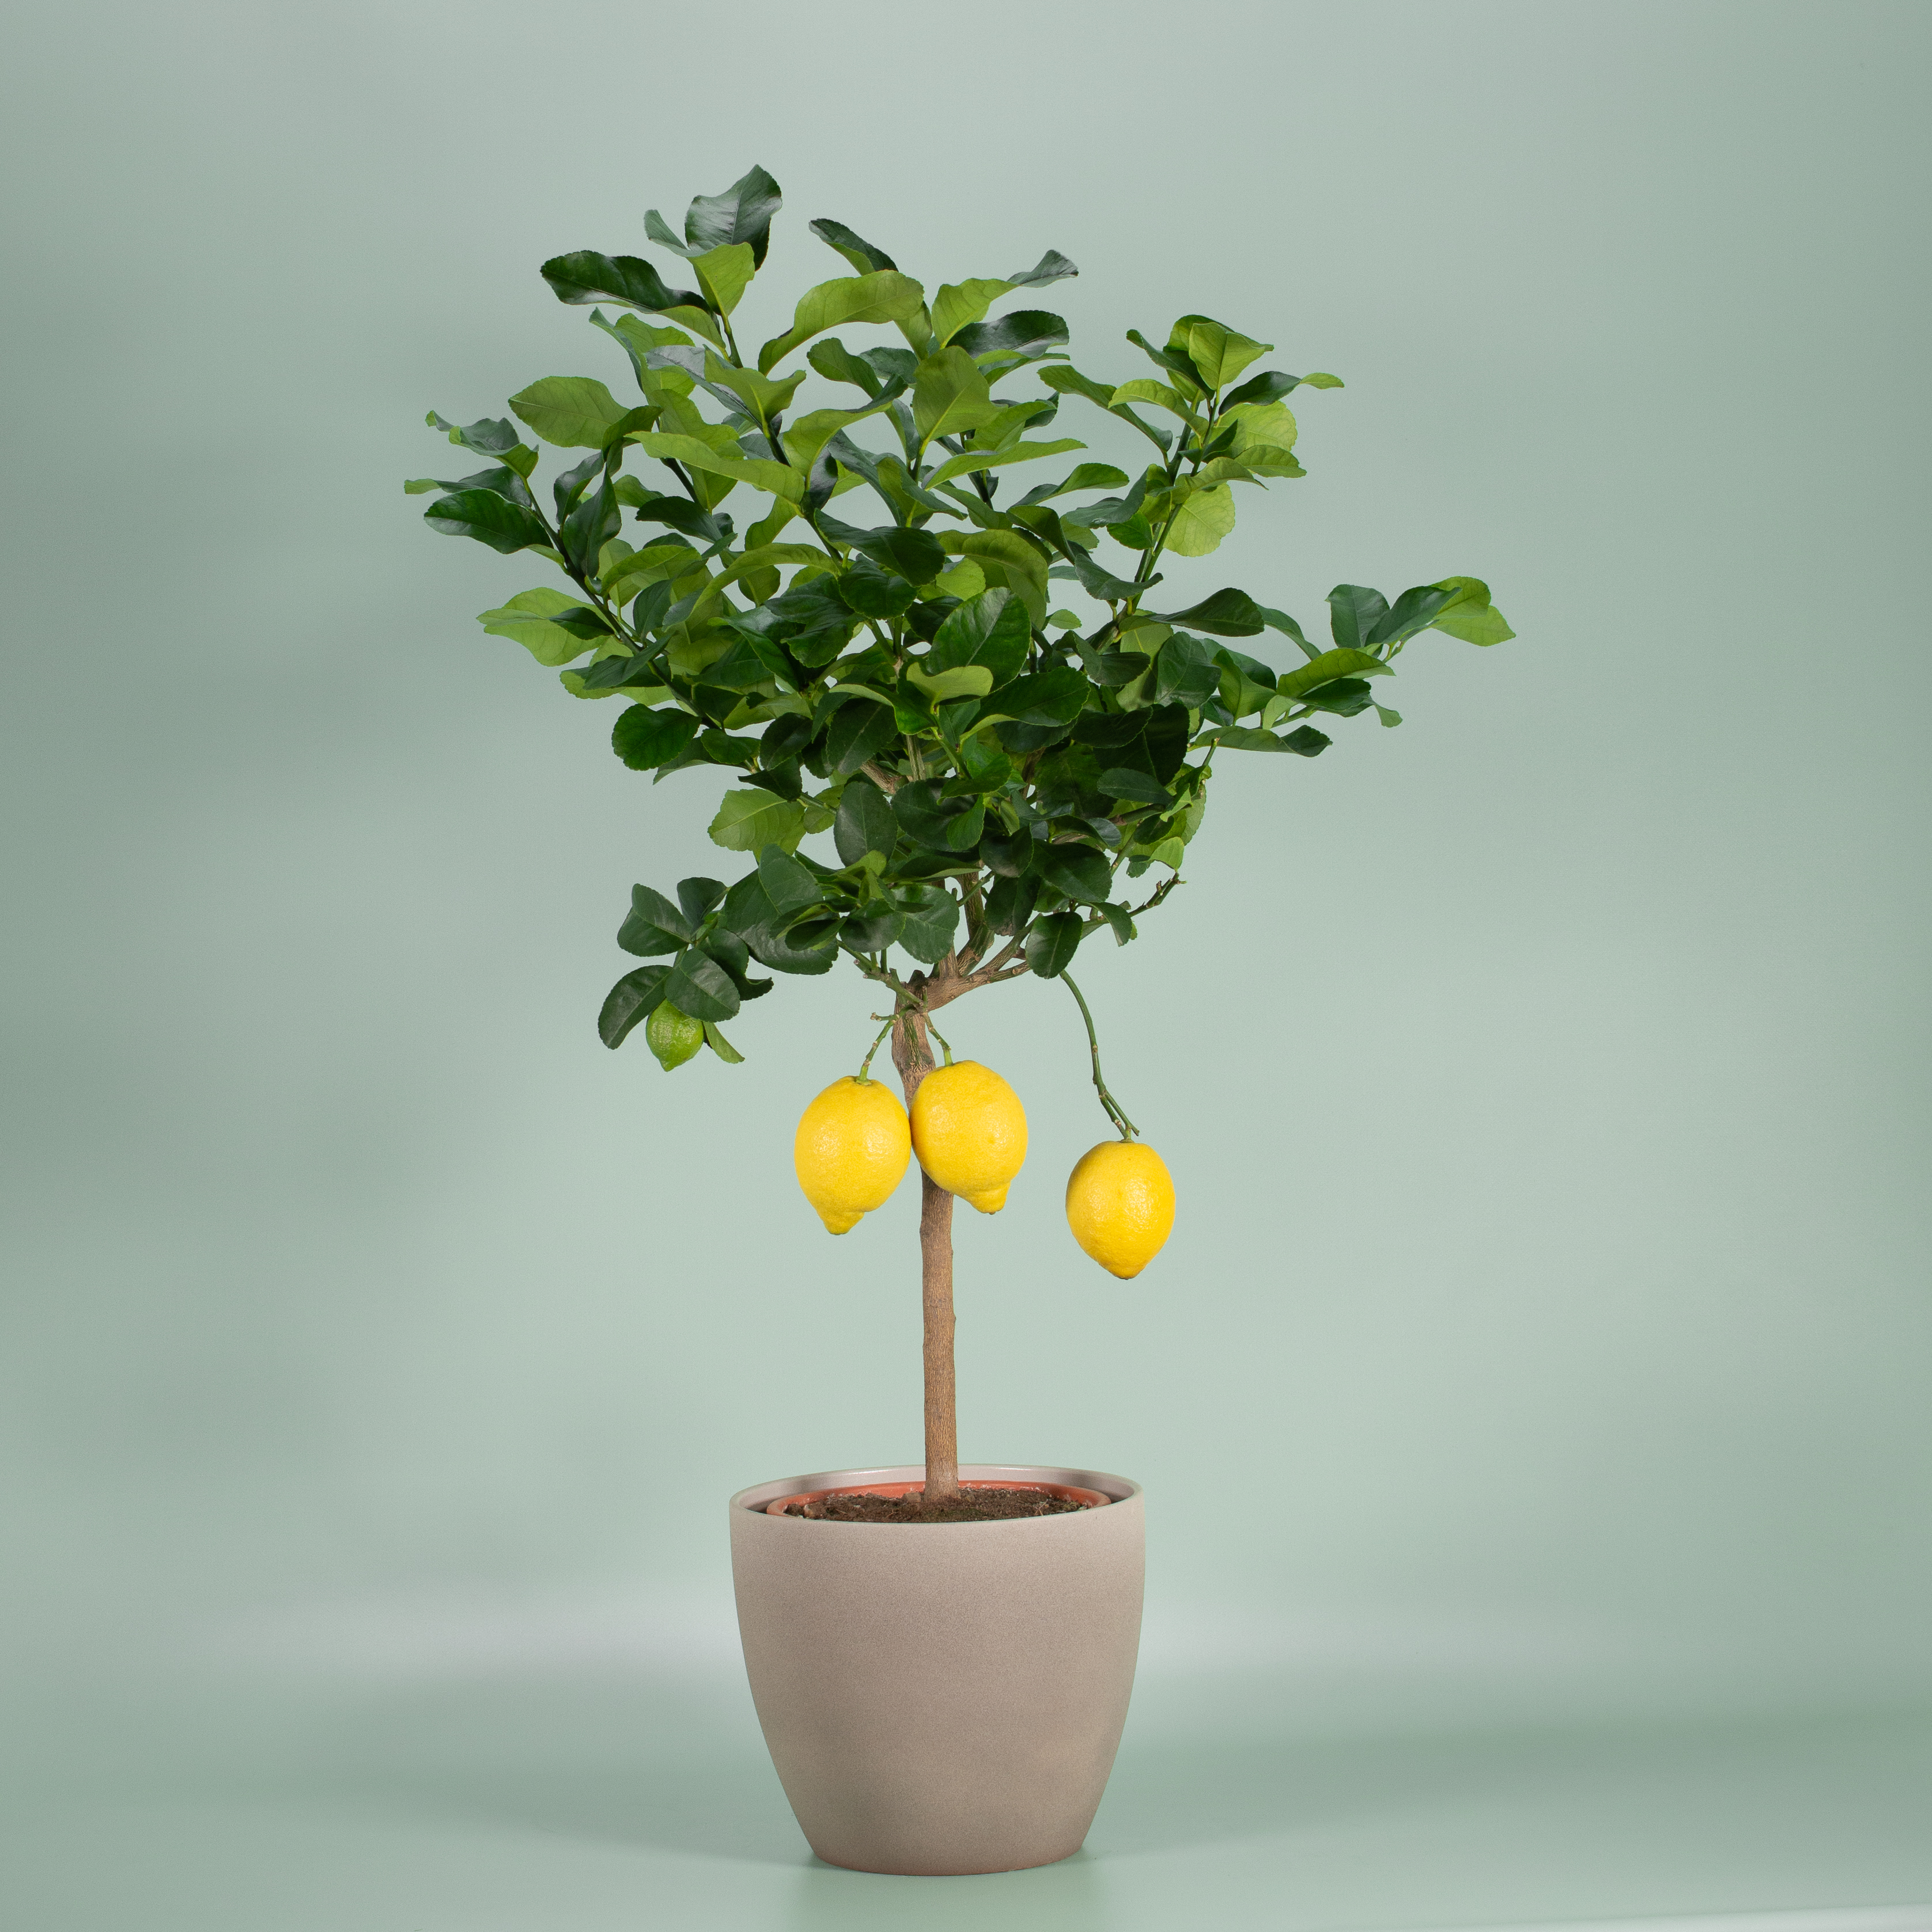 Citrus limon ᐅ der Zitronenbaum | Plantaddiction